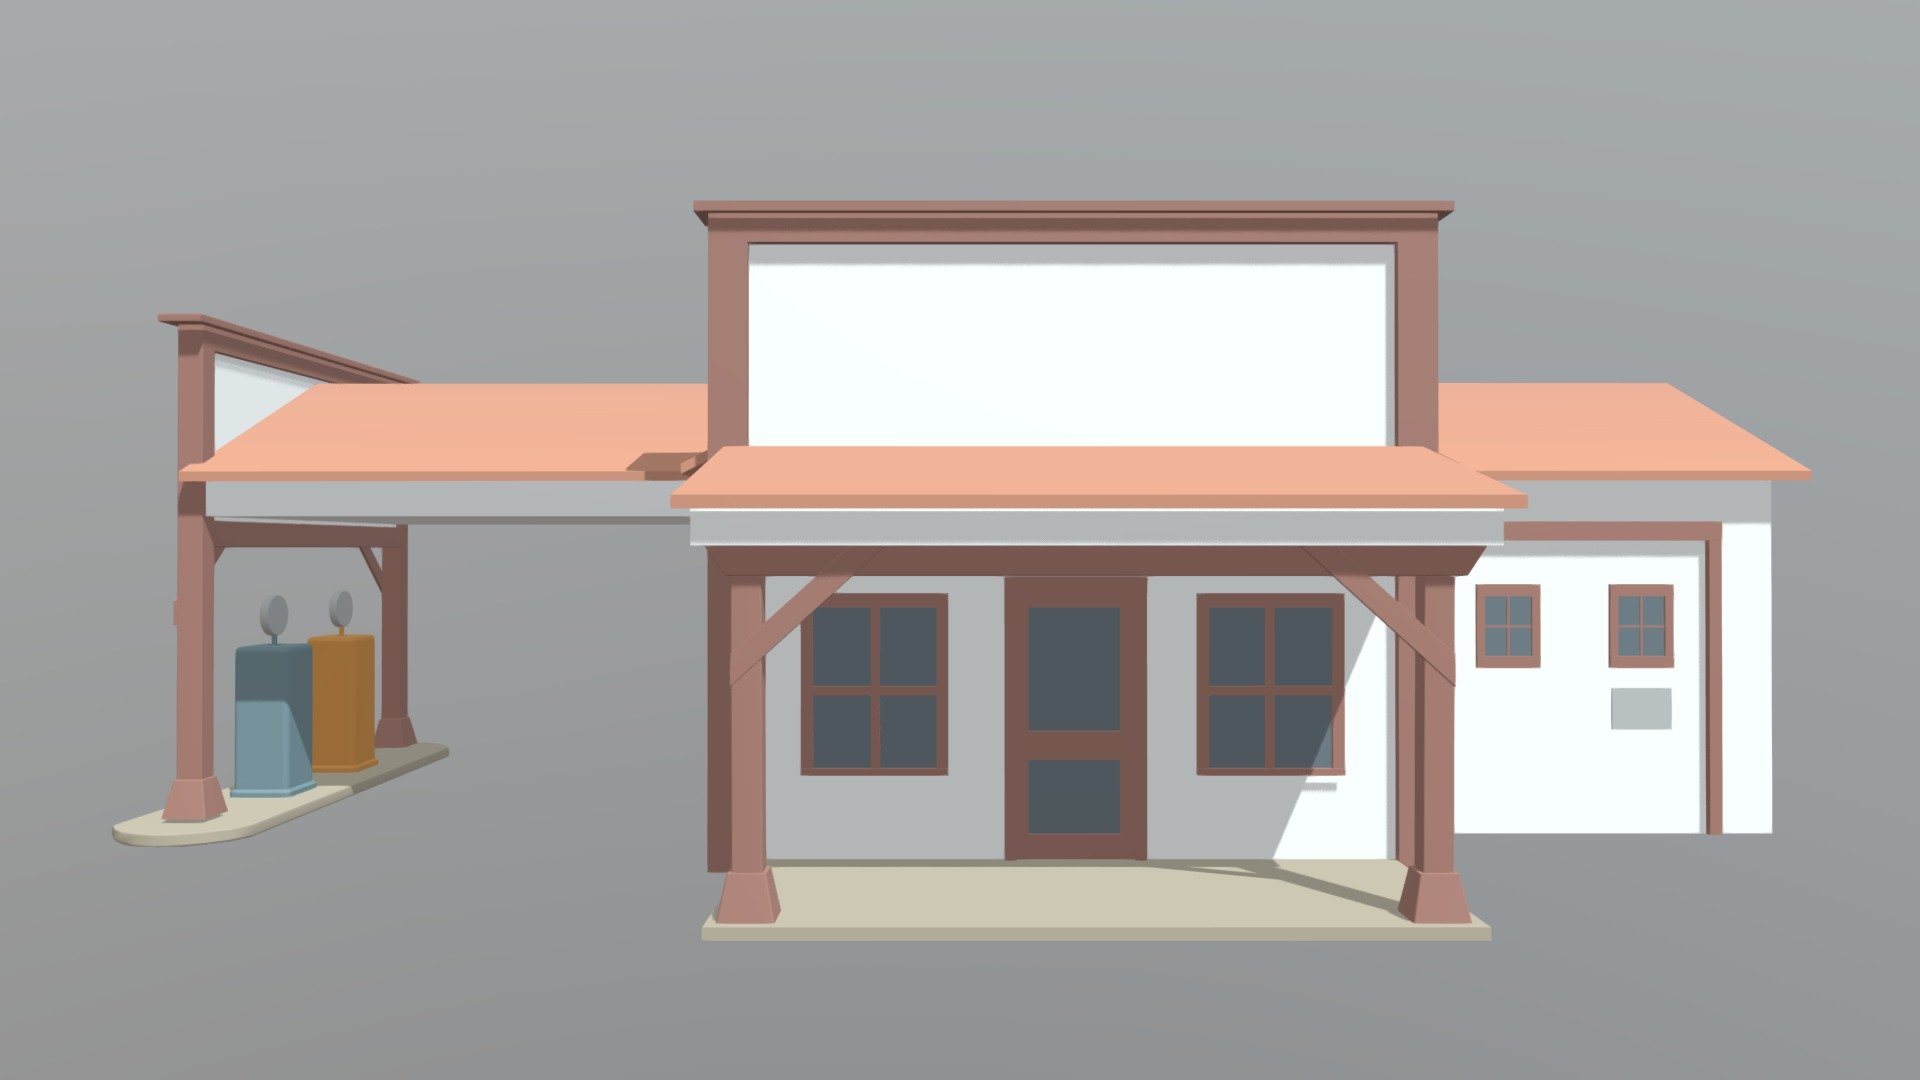 Gas Station - 3D model by Bryan Thacker (@brythacker) 3d model